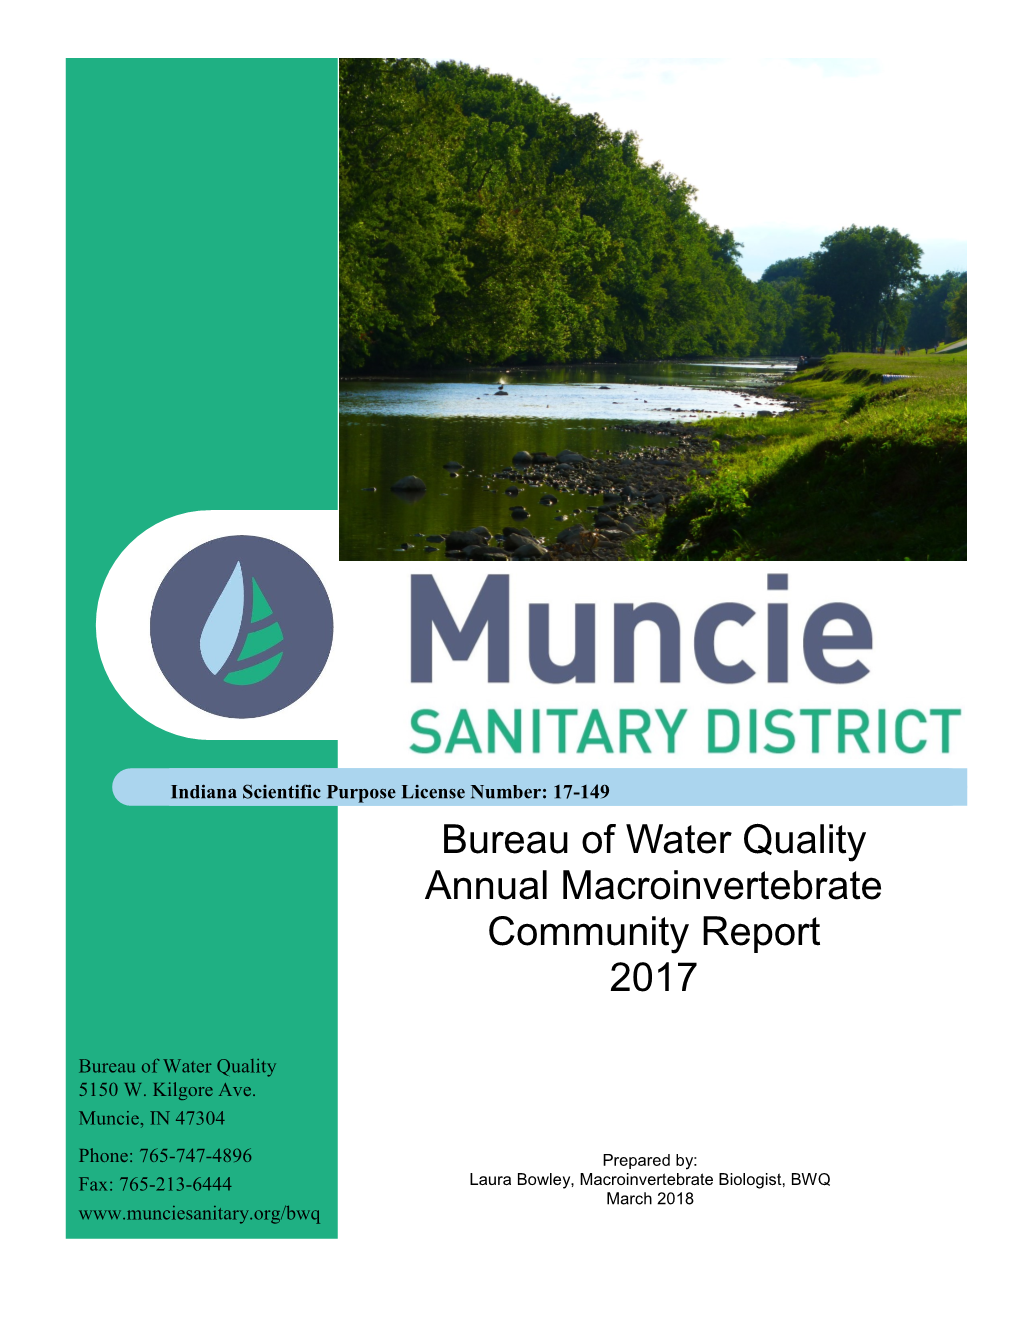 Bureau of Water Quality Annual Macroinvertebrate Community Report 2017